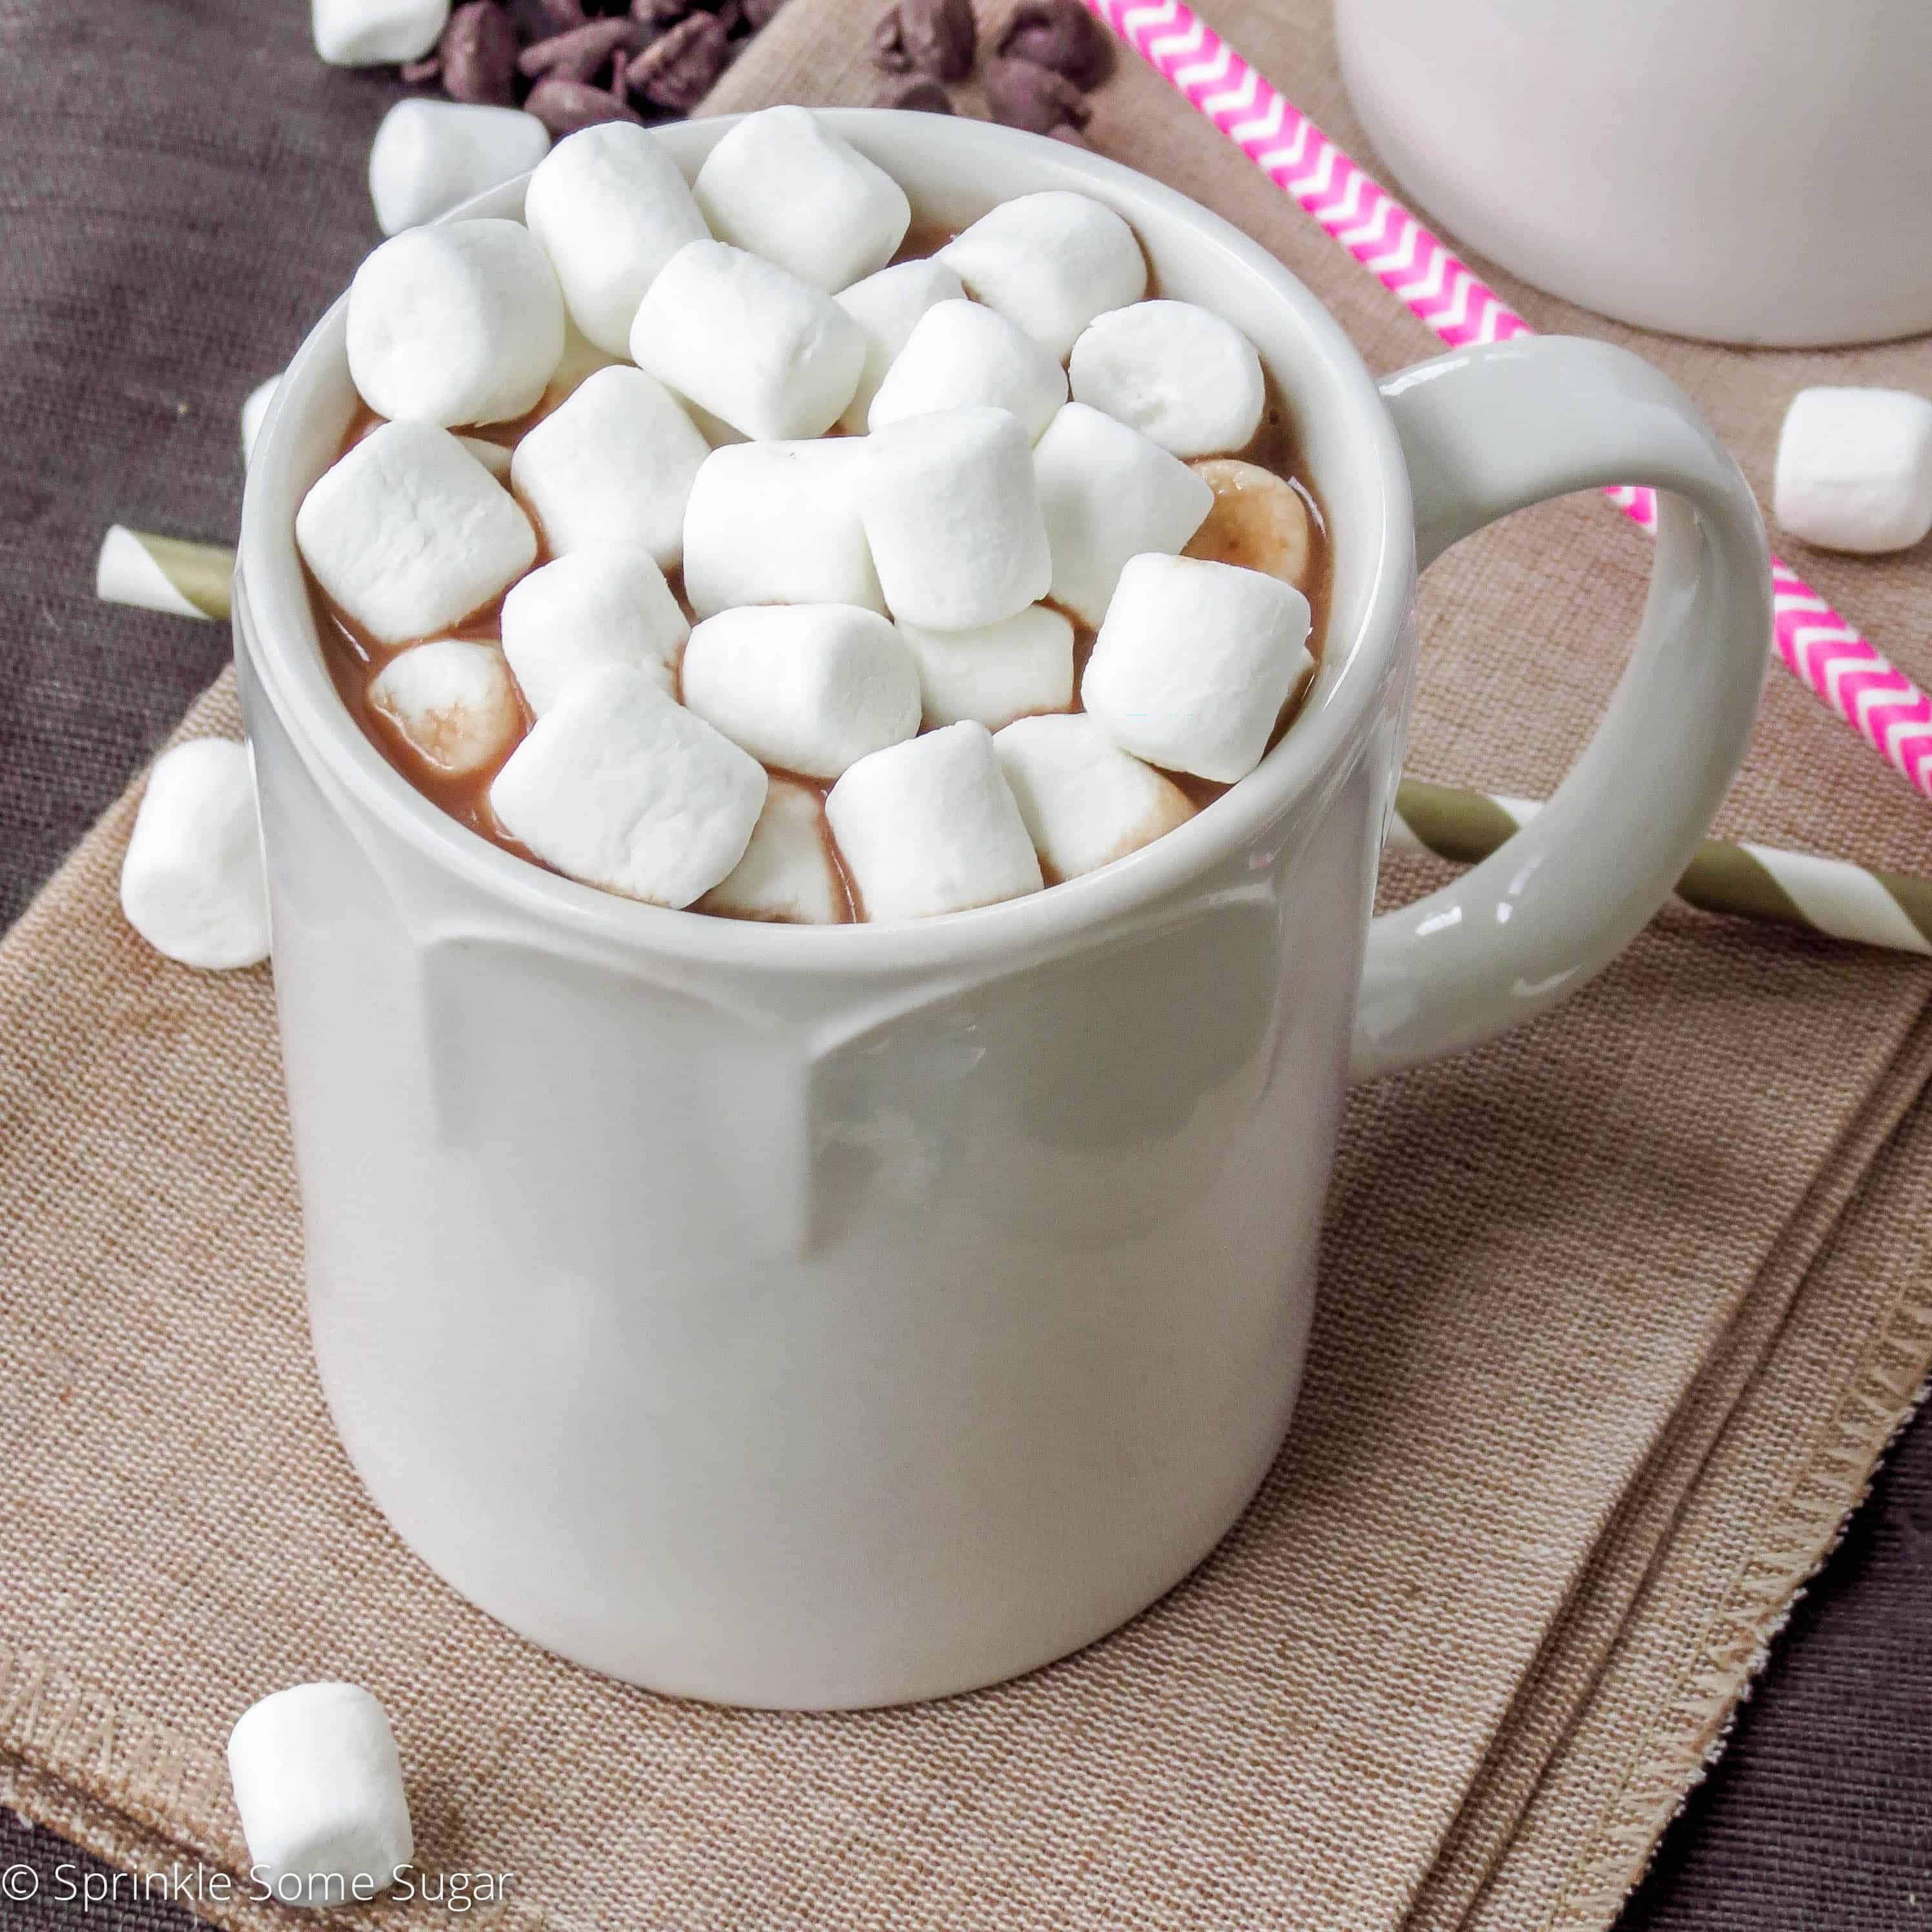 Mug of homemade hot chocolate with marshmallows.